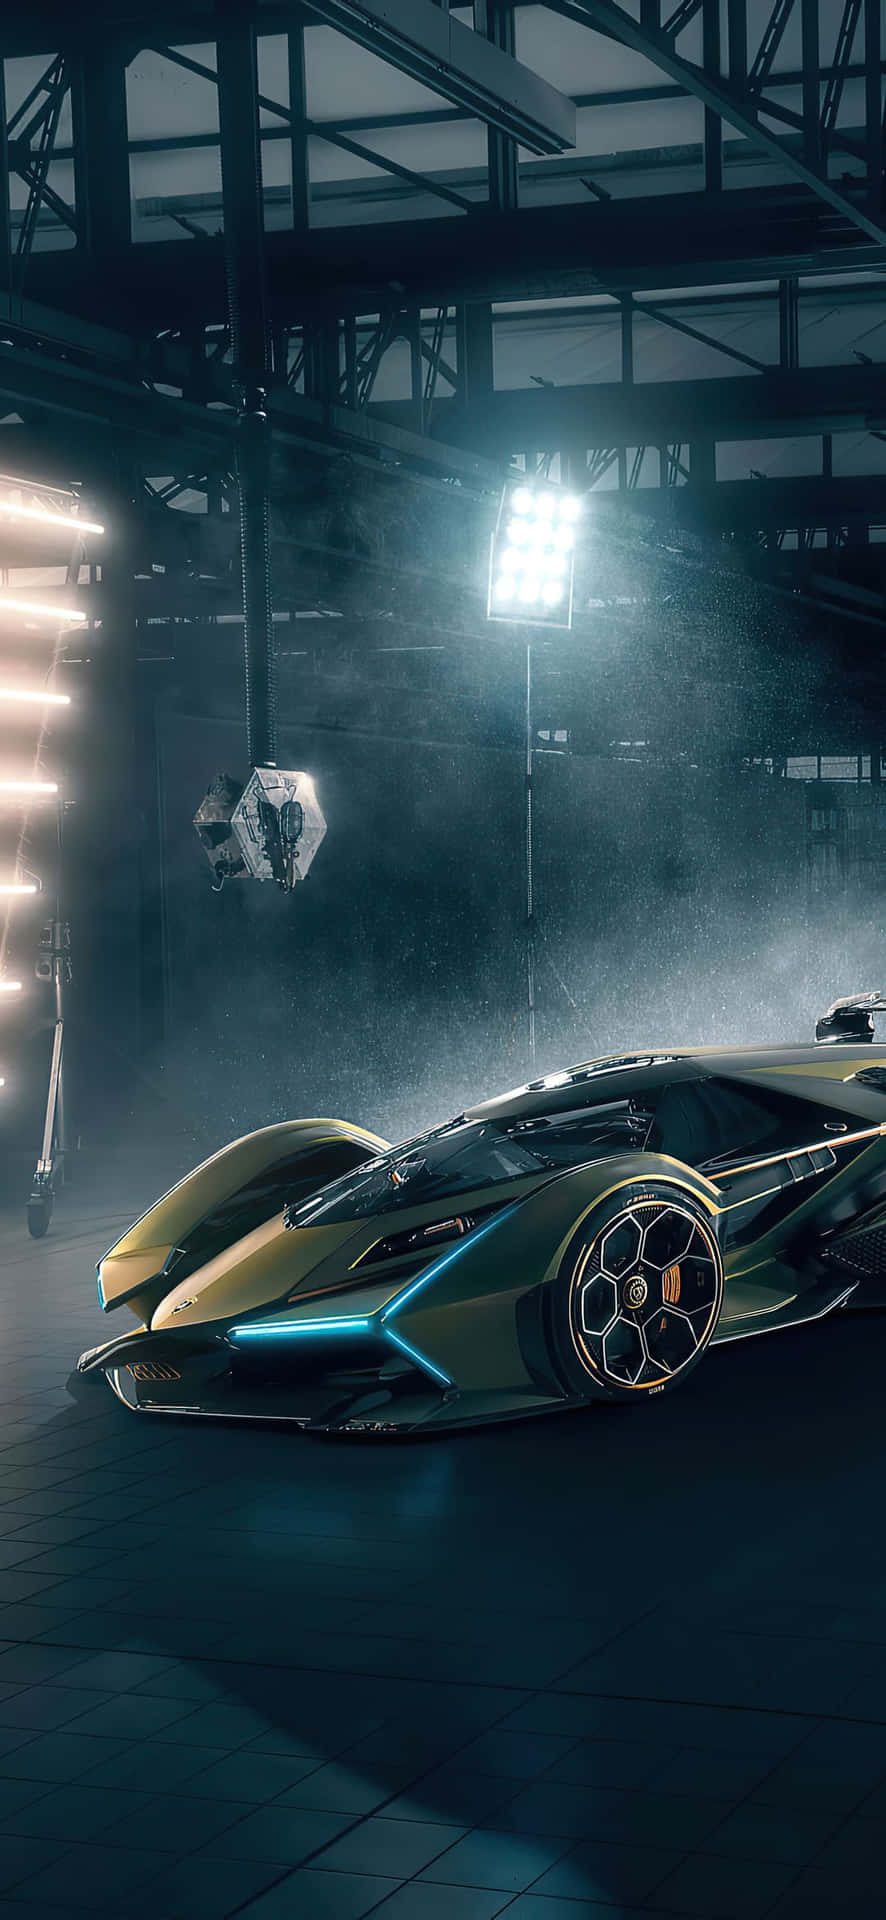 A Futuristic Car Is Shown In A Dark Room Background